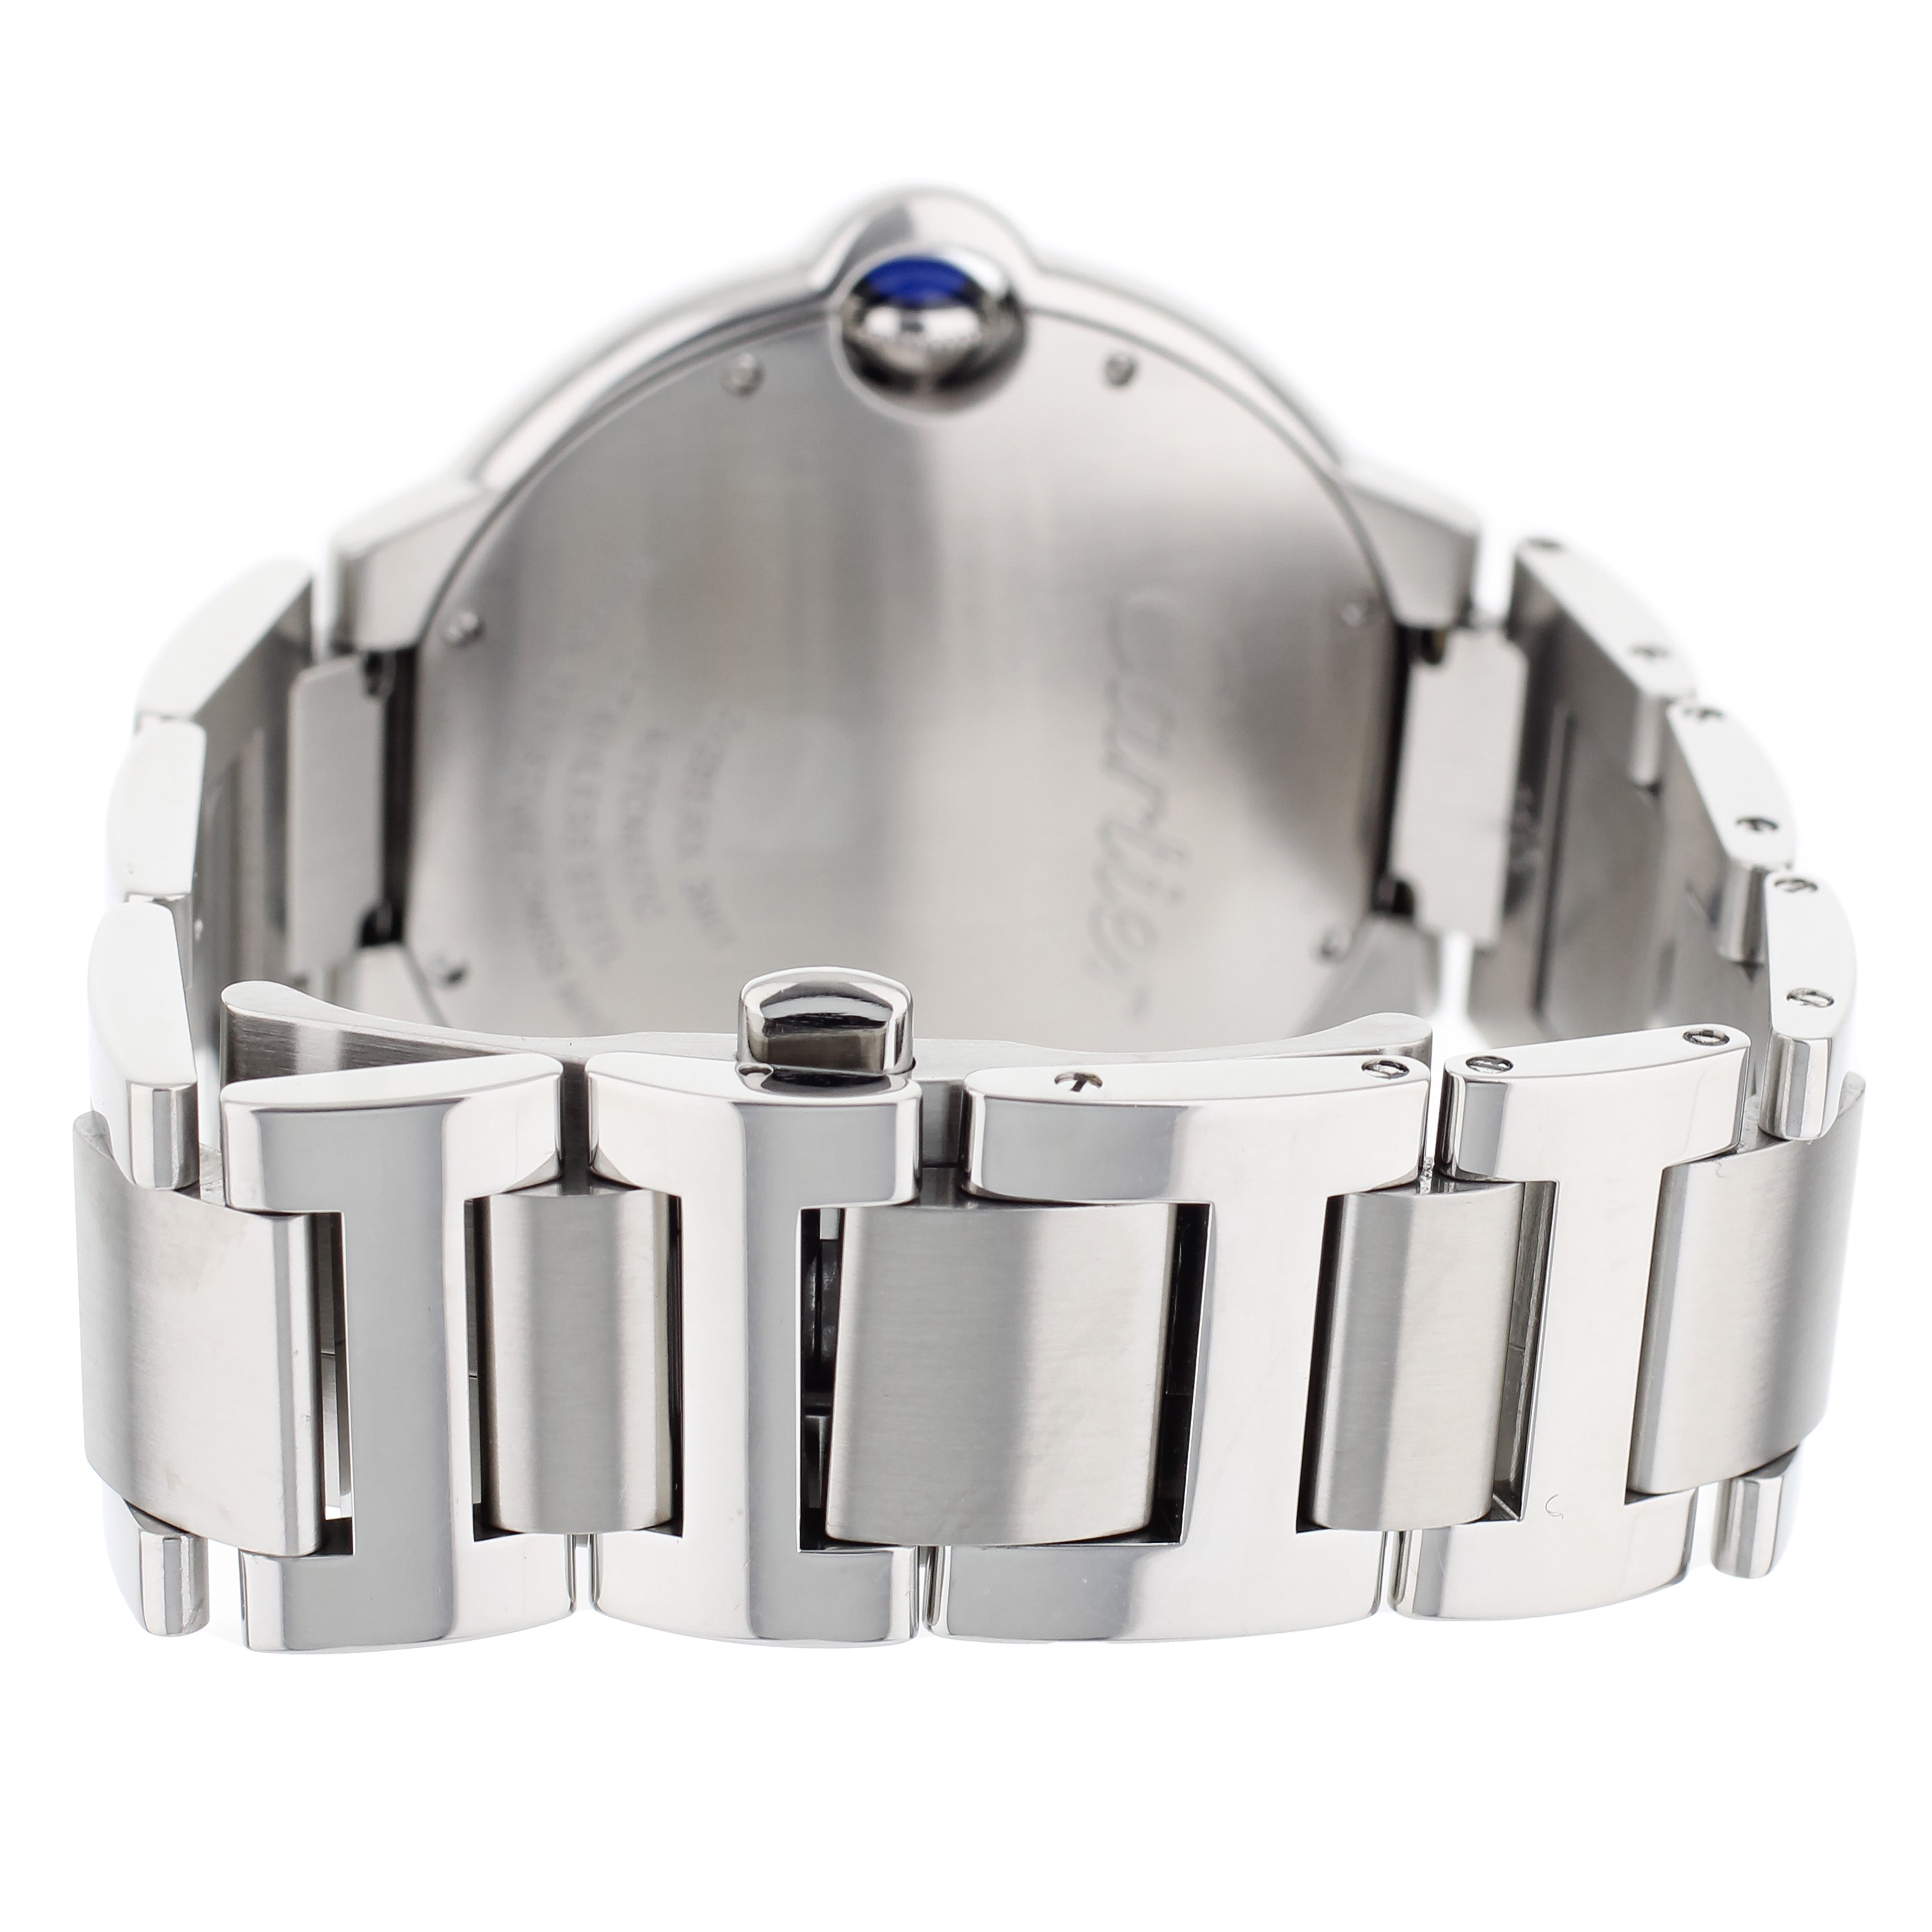 Cartier Ballon Bleu Stainless Steel Silver Dial on Bracelet 42mm W69012Z4